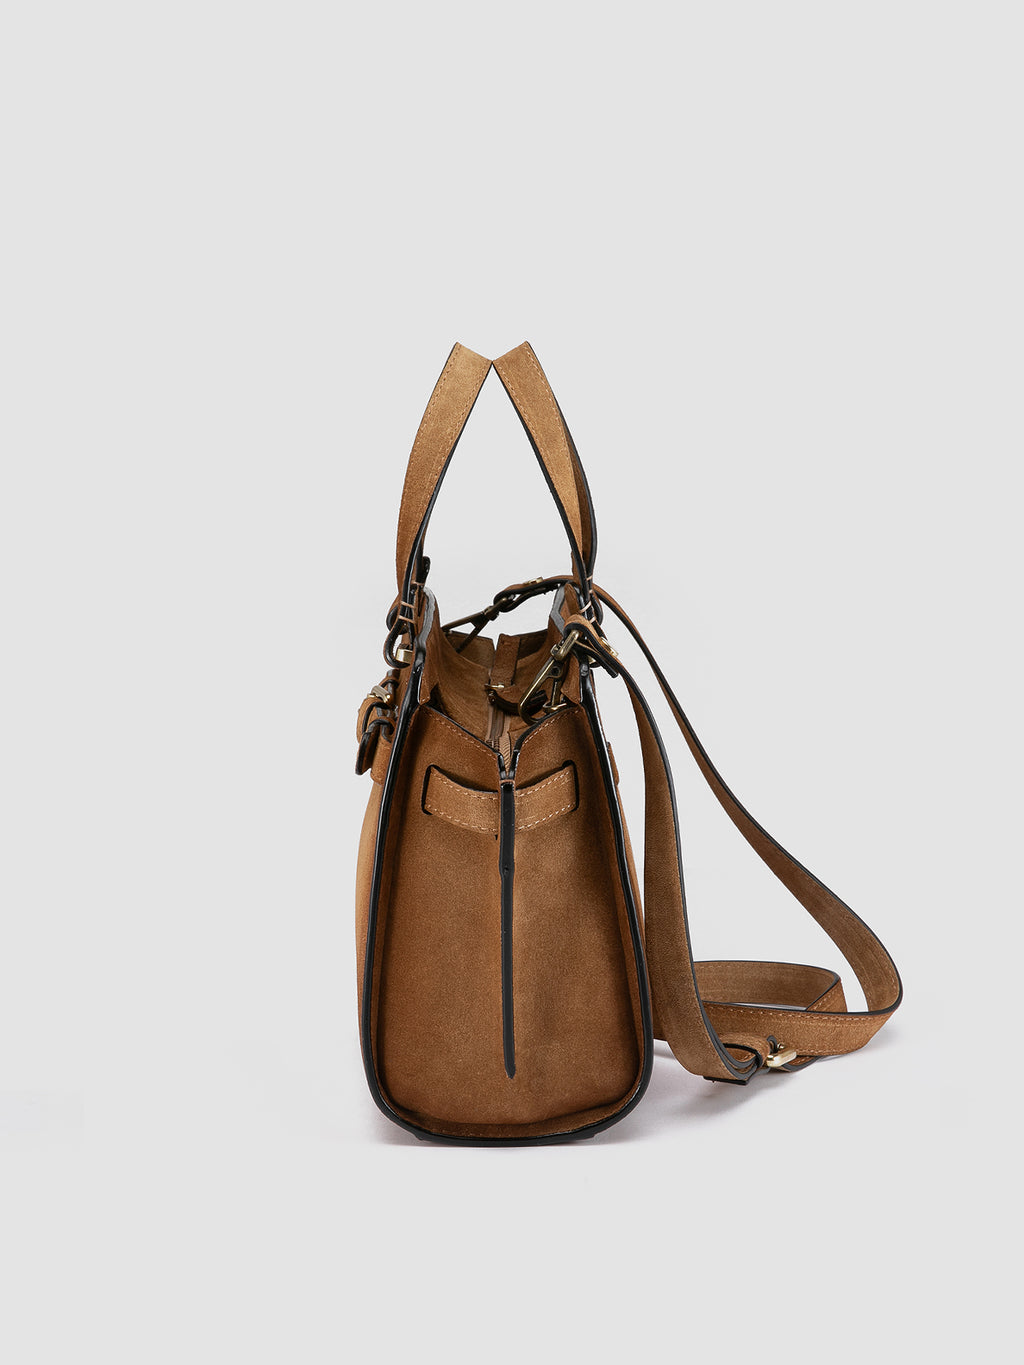 SADDLE 019 - Brown Suede Handle Bag